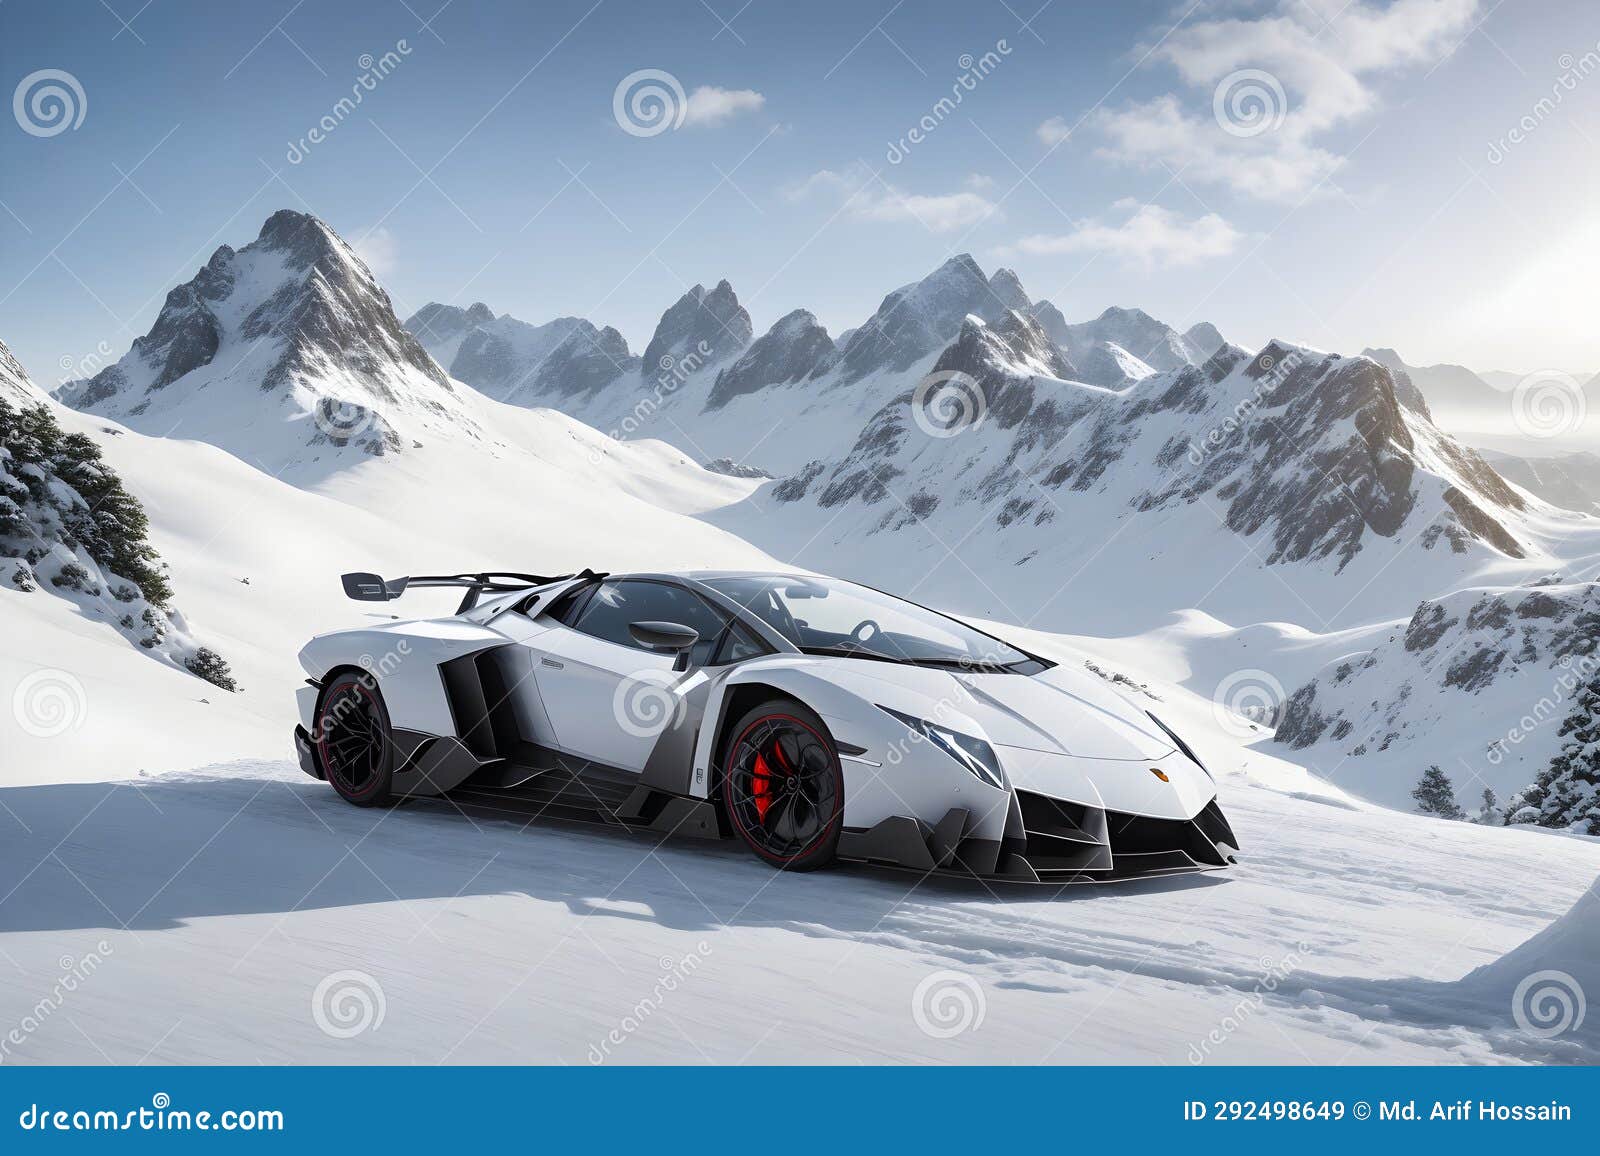 a lamborghini veneno on a snowy mountain peak surrounded by pristine white snow generated by ai